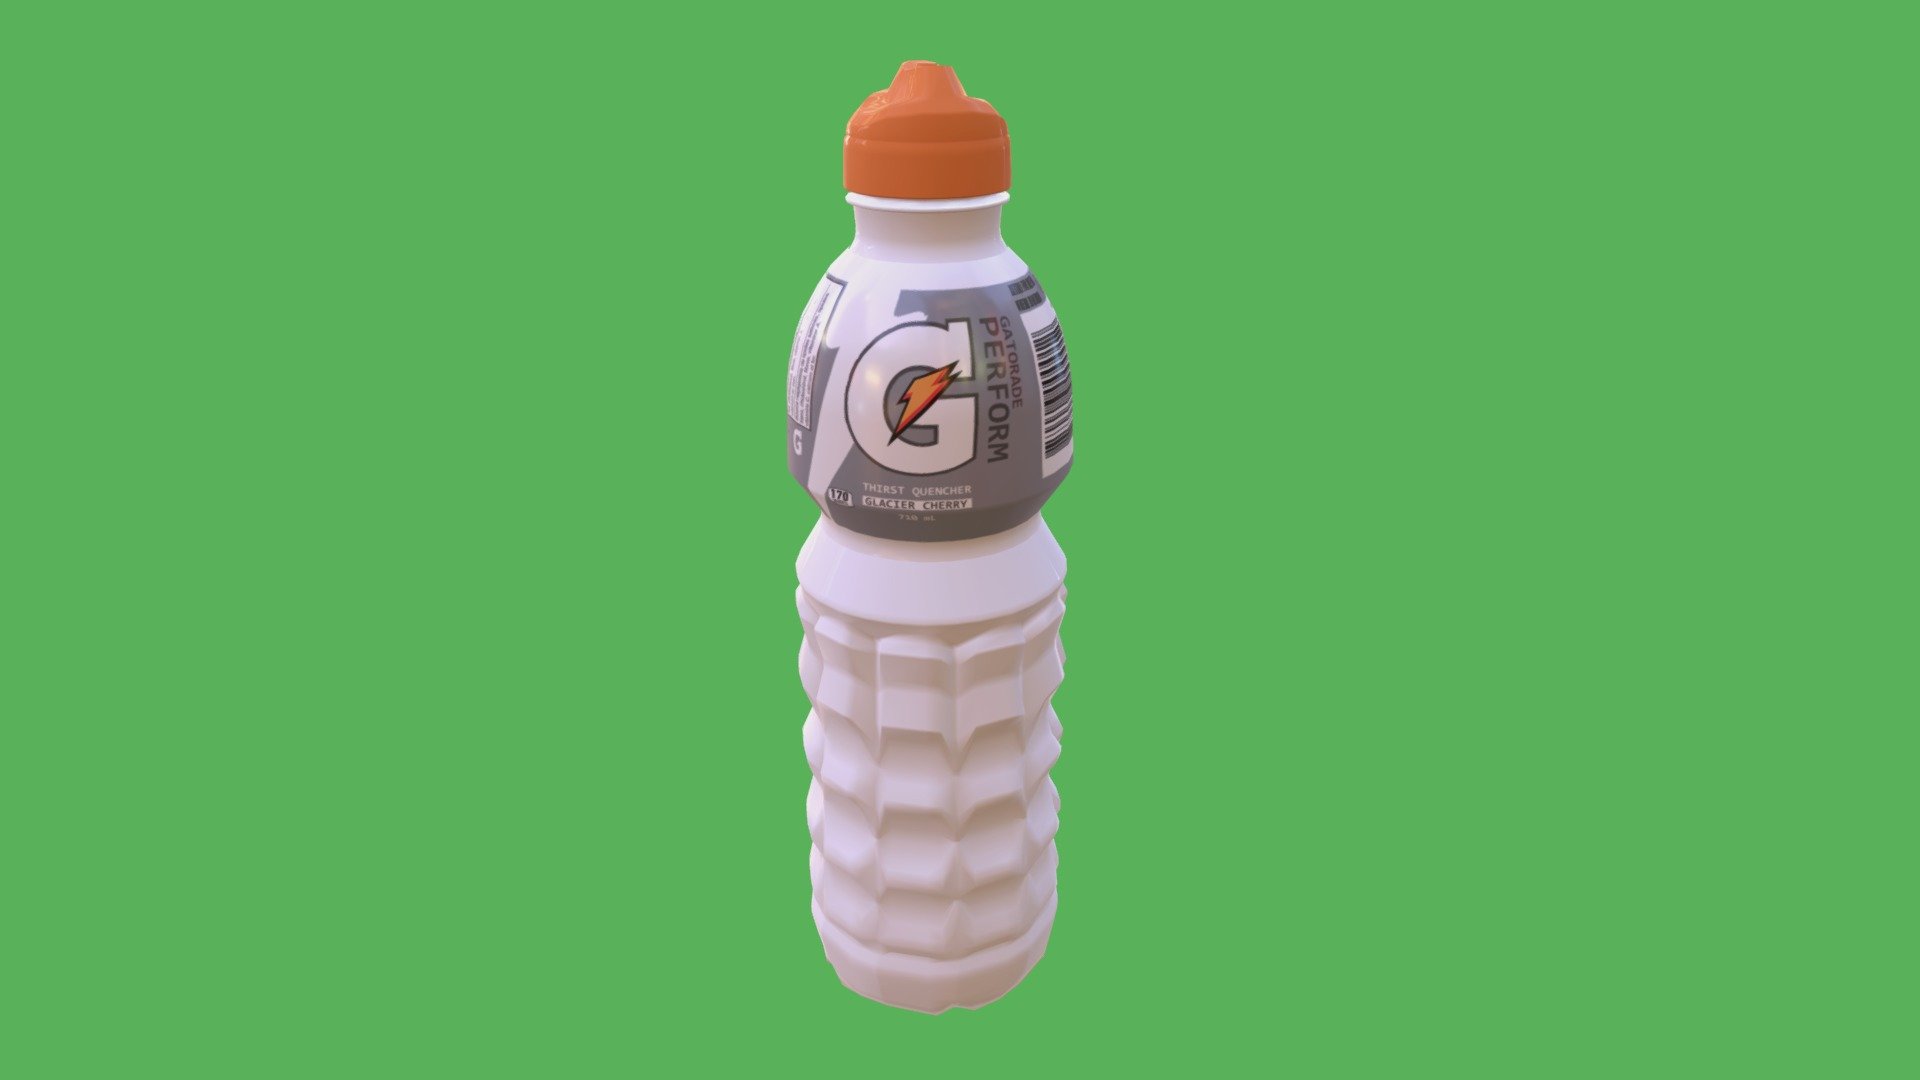 Gatorade Bottle